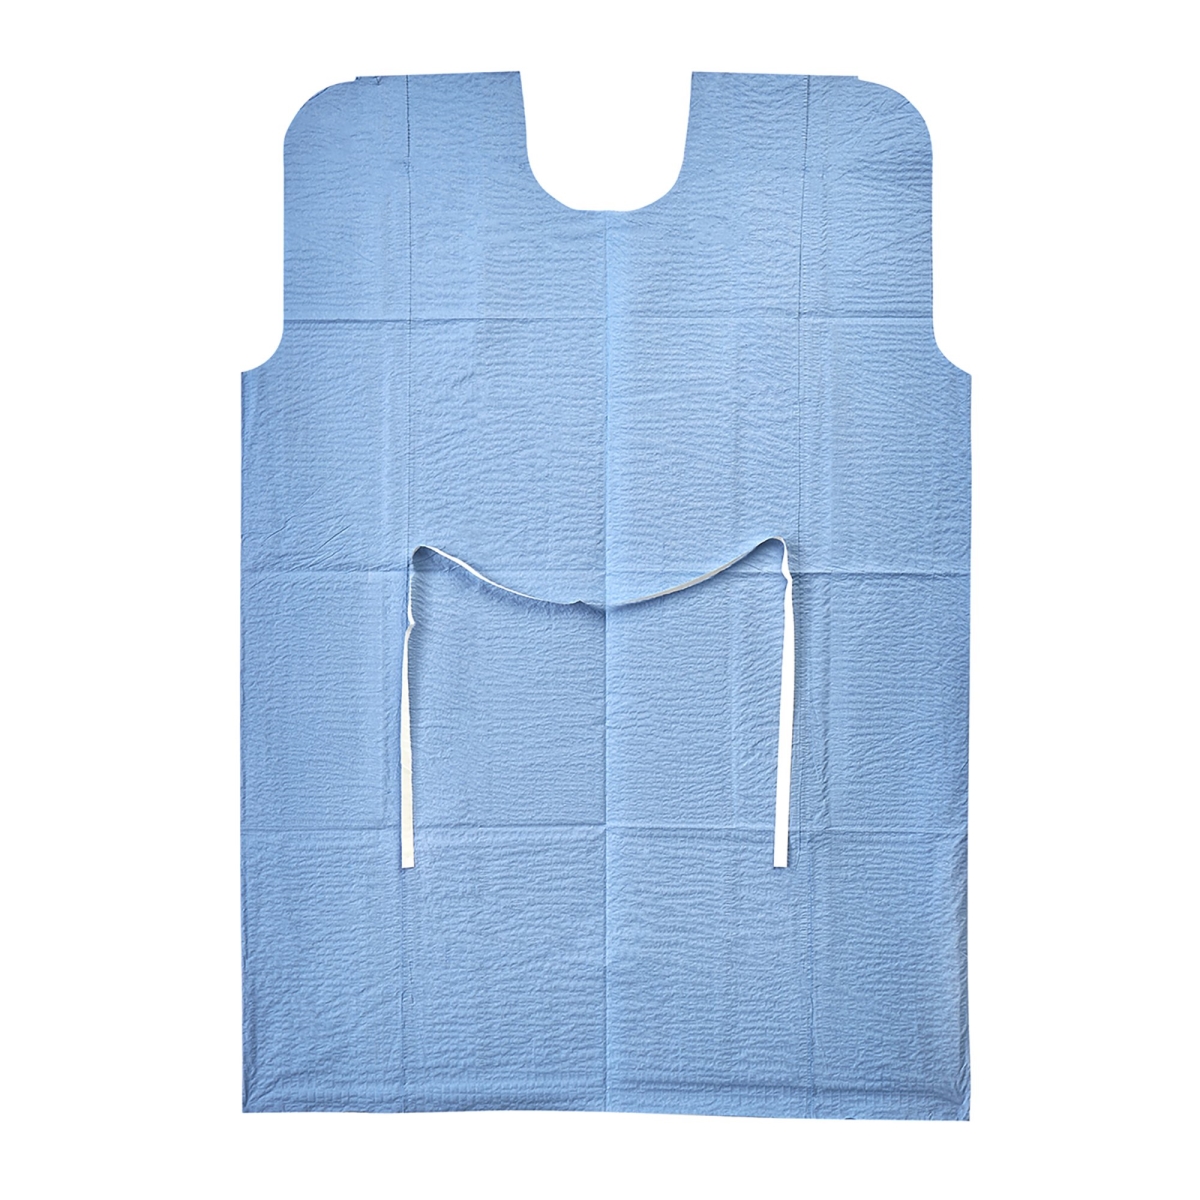 247351-CS Patient Exam Gown, Blue - Medium & Large - Pack of 50 -  Graham Medical Products, 247351_CS